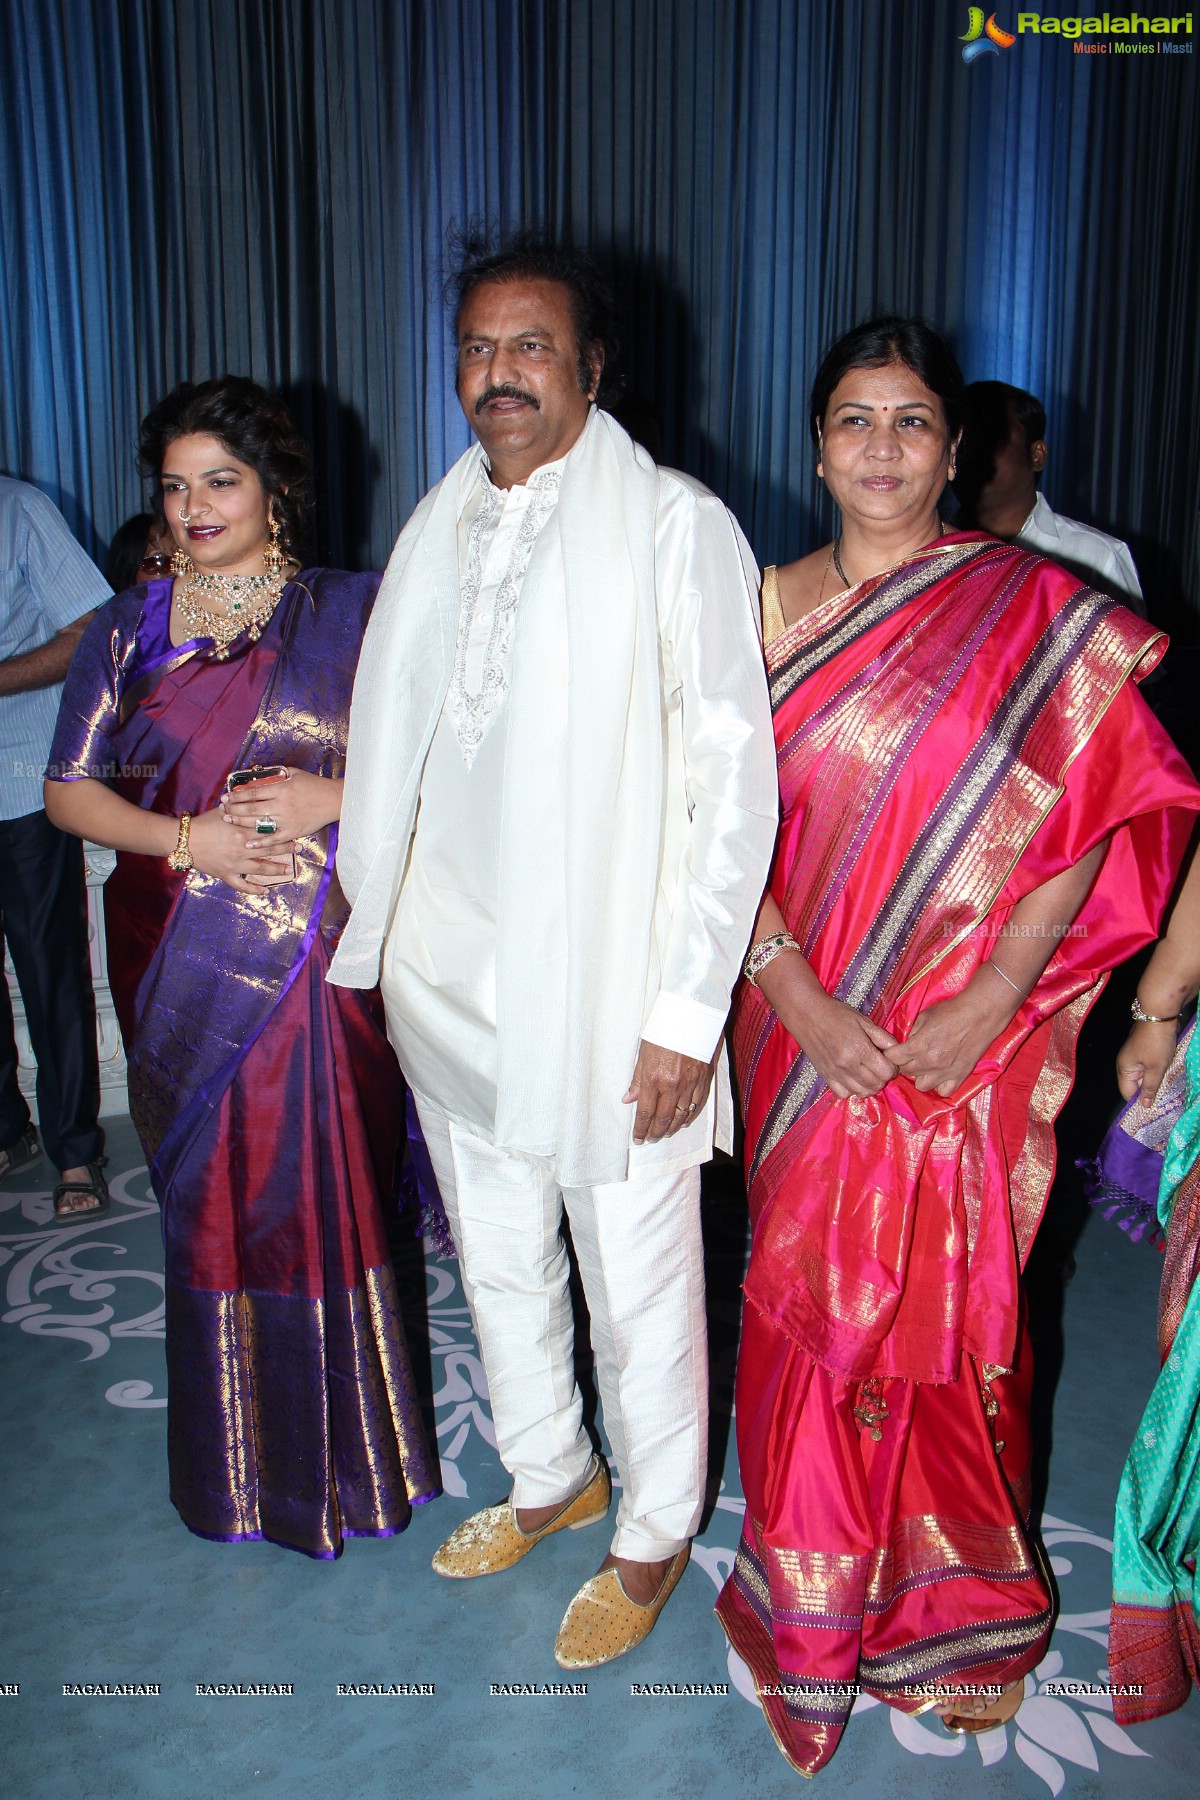 Grand Wedding of Keshav Reddy with Veena Reddy at GMR Grounds, Hyderabad